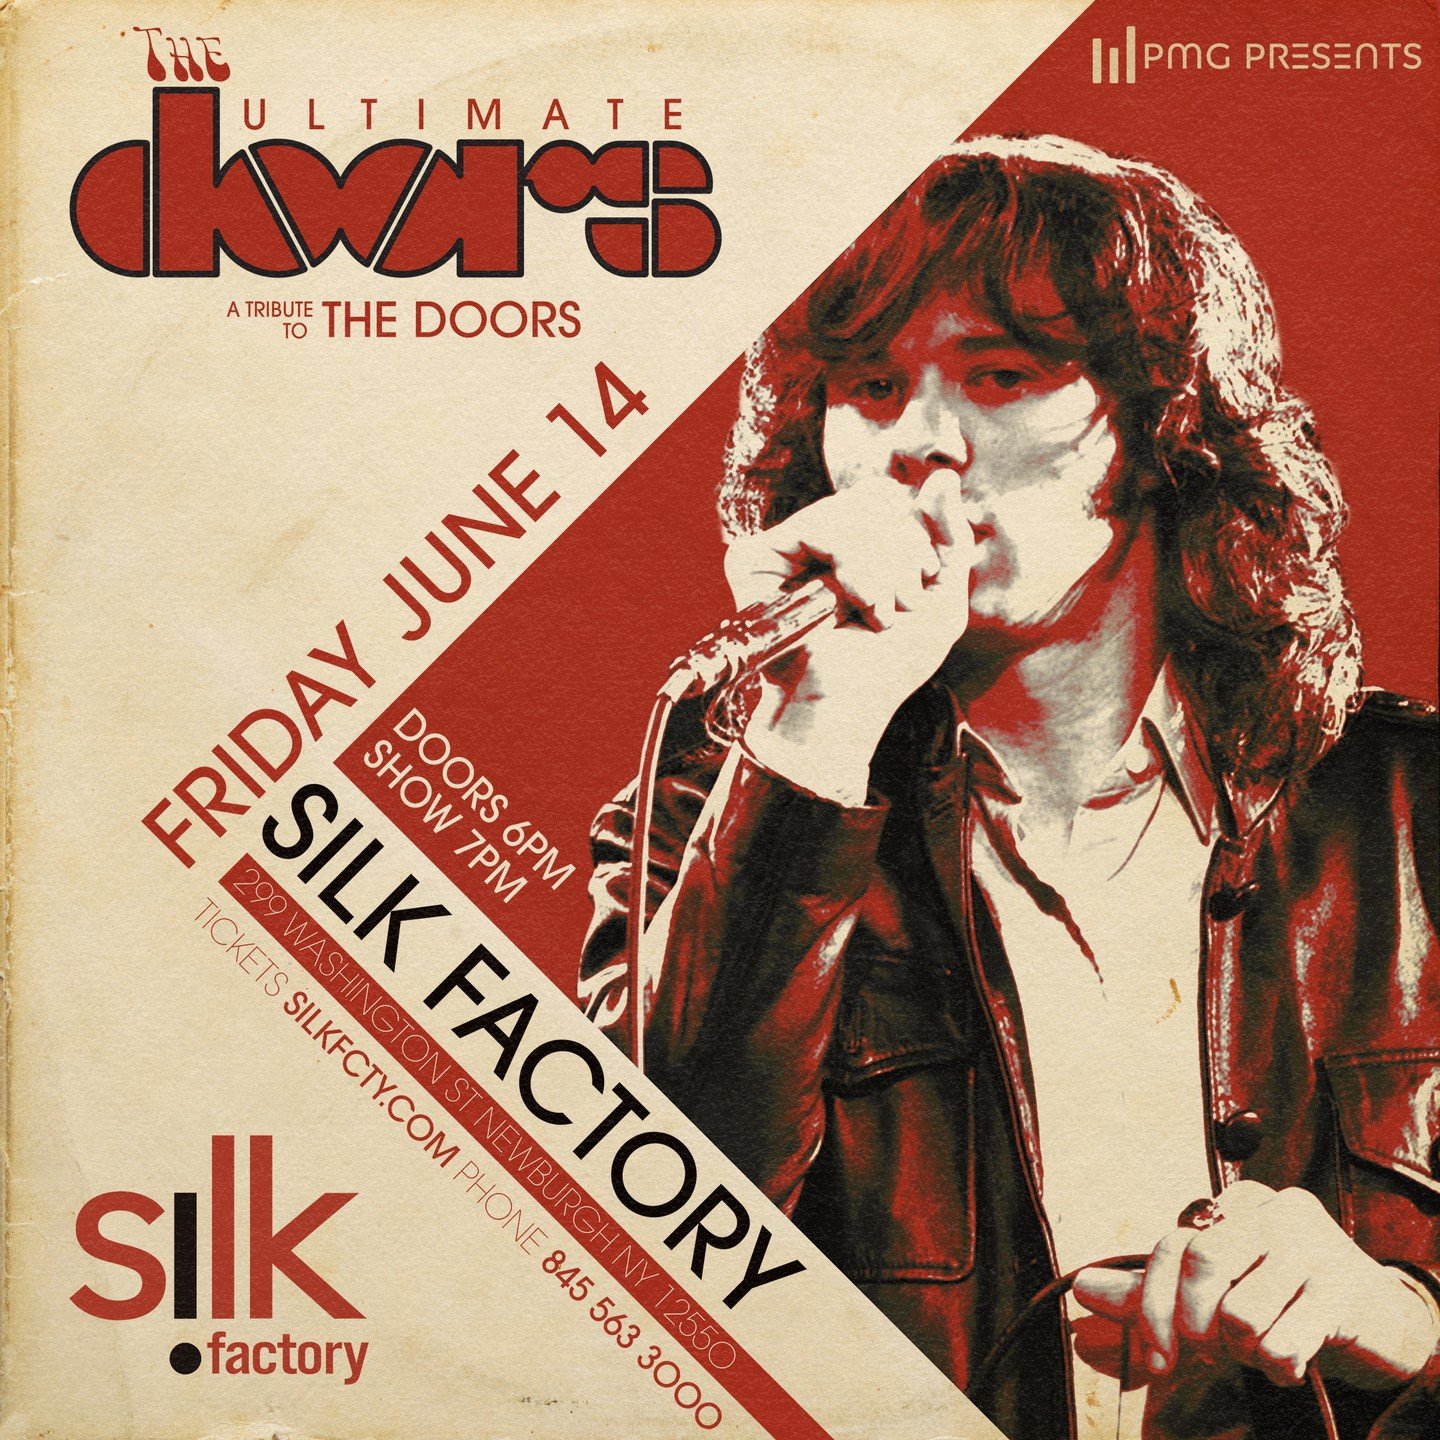 The Ultimate Doors @theultimatedoors 
Silk Factory @silkfcty 

Friday, June 14 | silkfcty.com